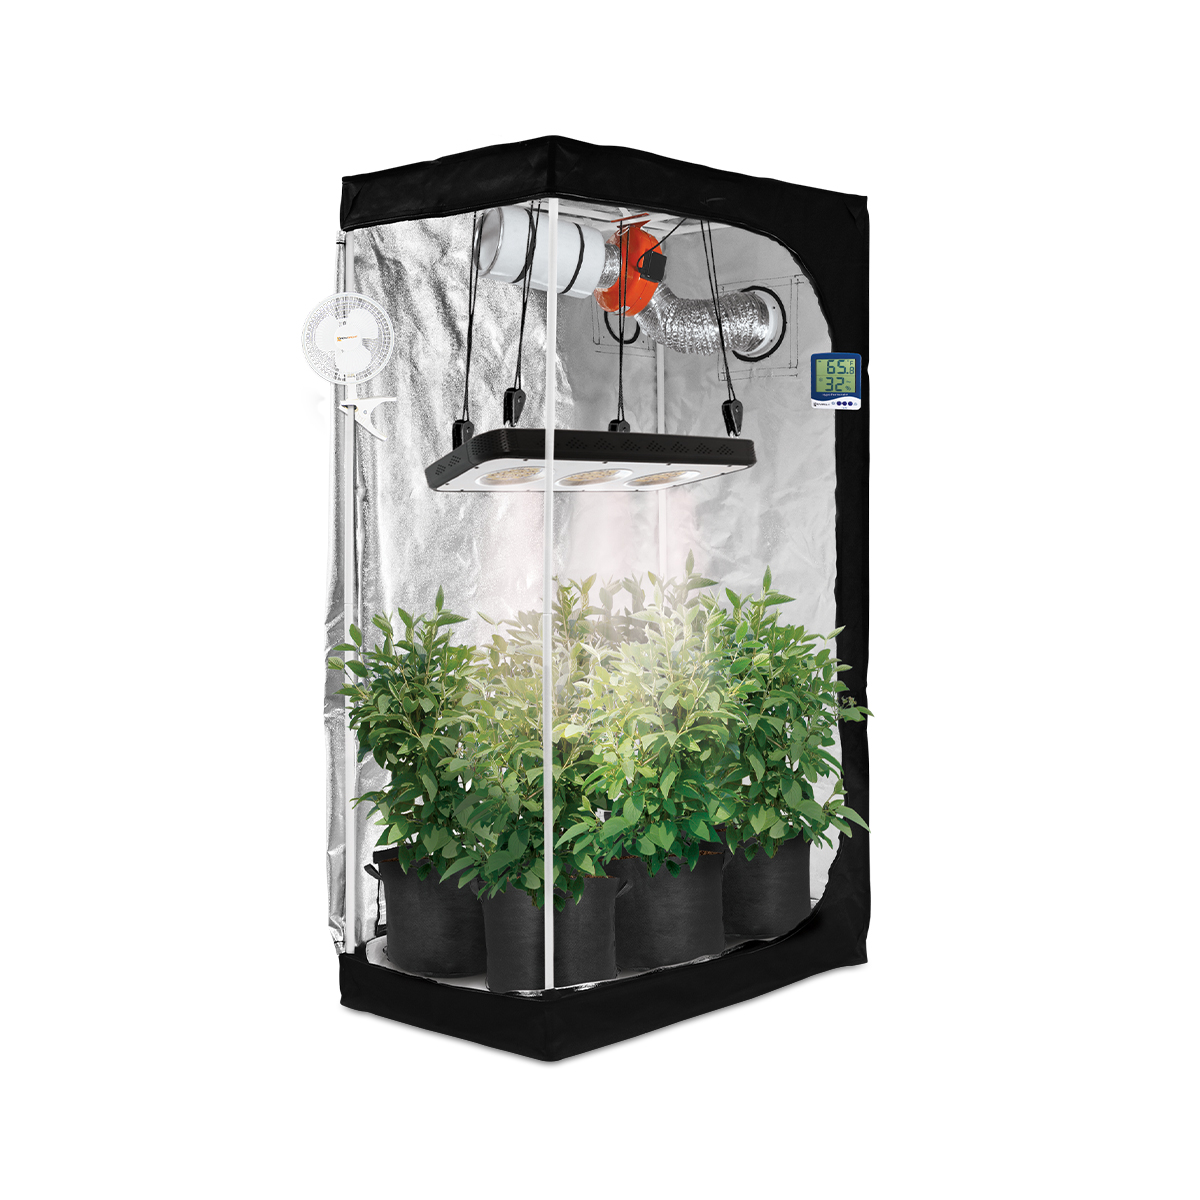 HTG Small 2'x3' Organic LED Grow Tent Kit